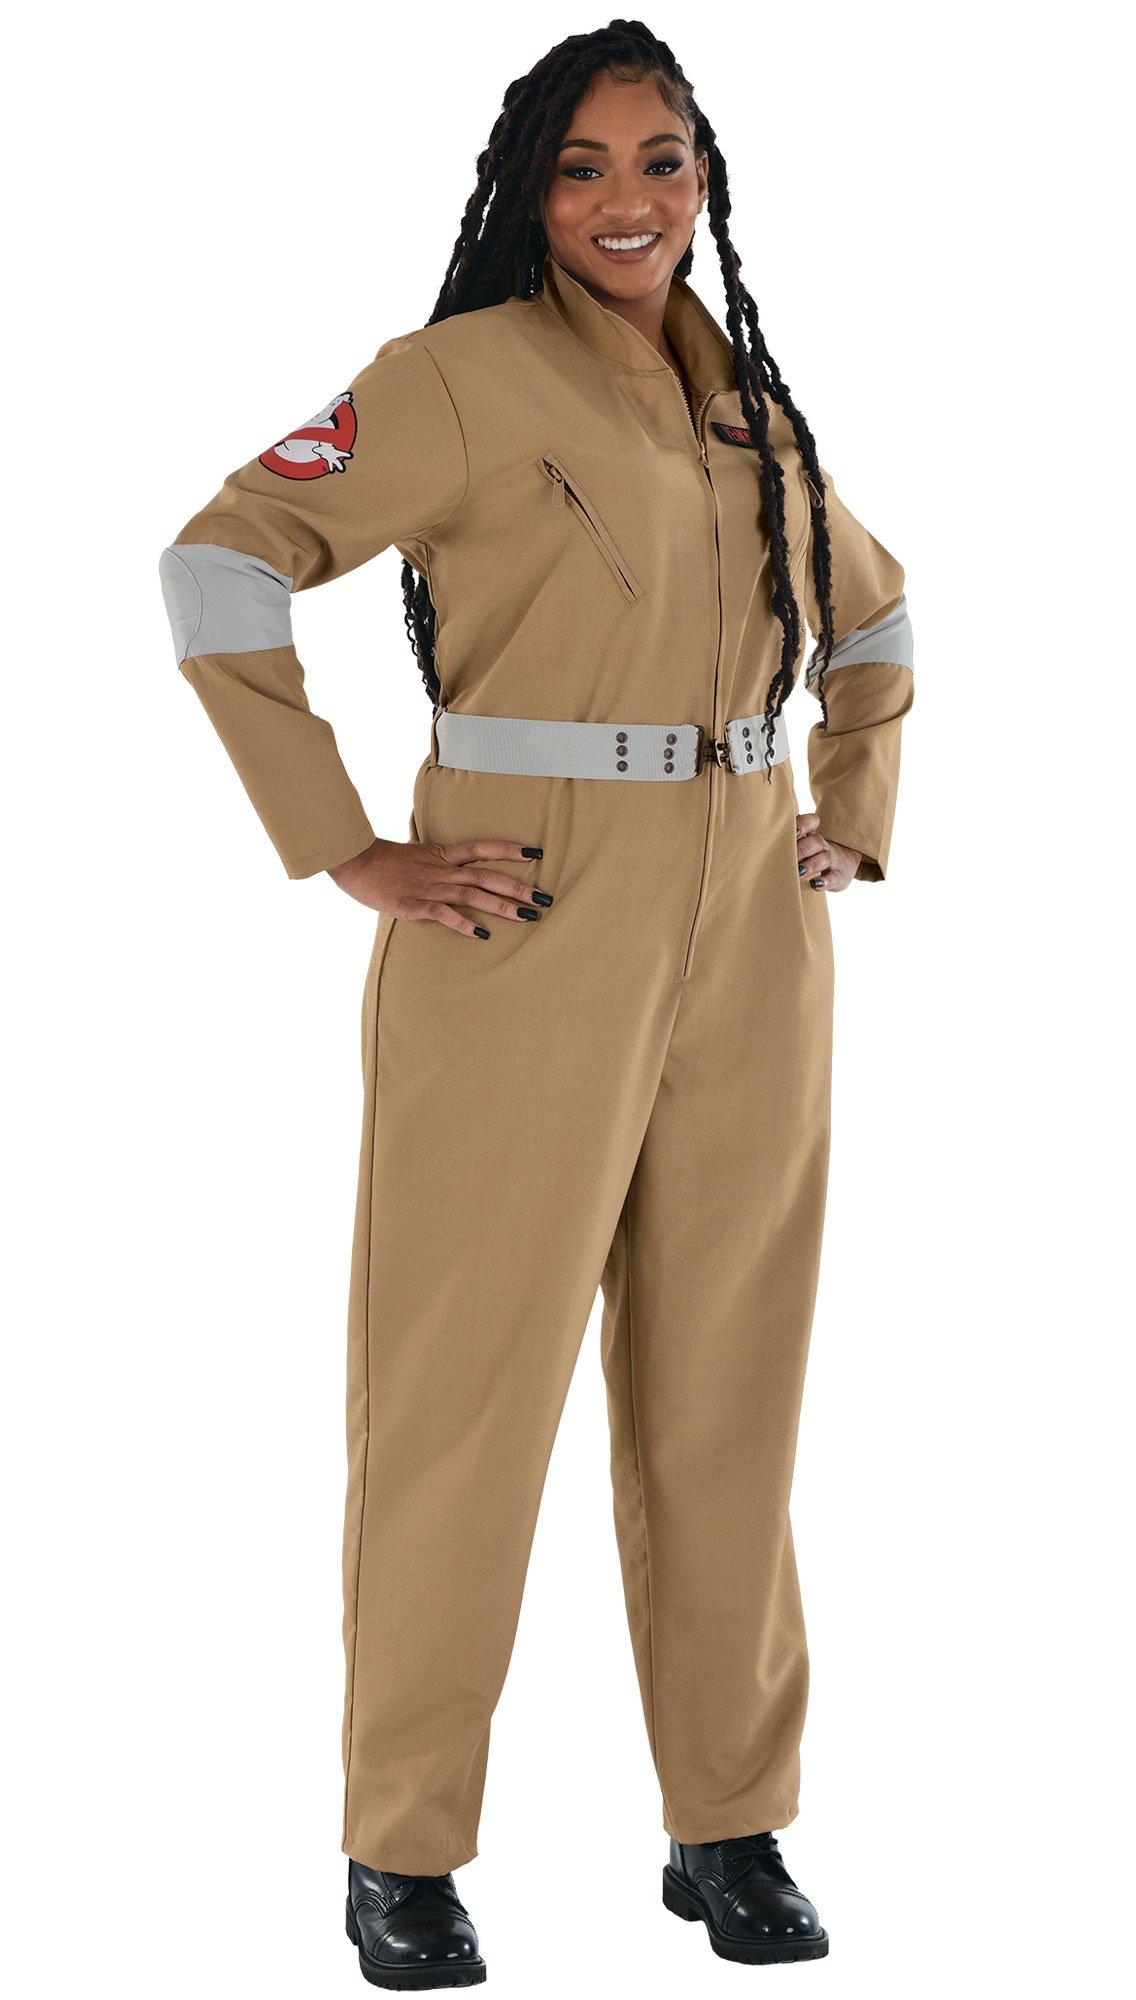 Women's Ghostbusters Plus Size Costume